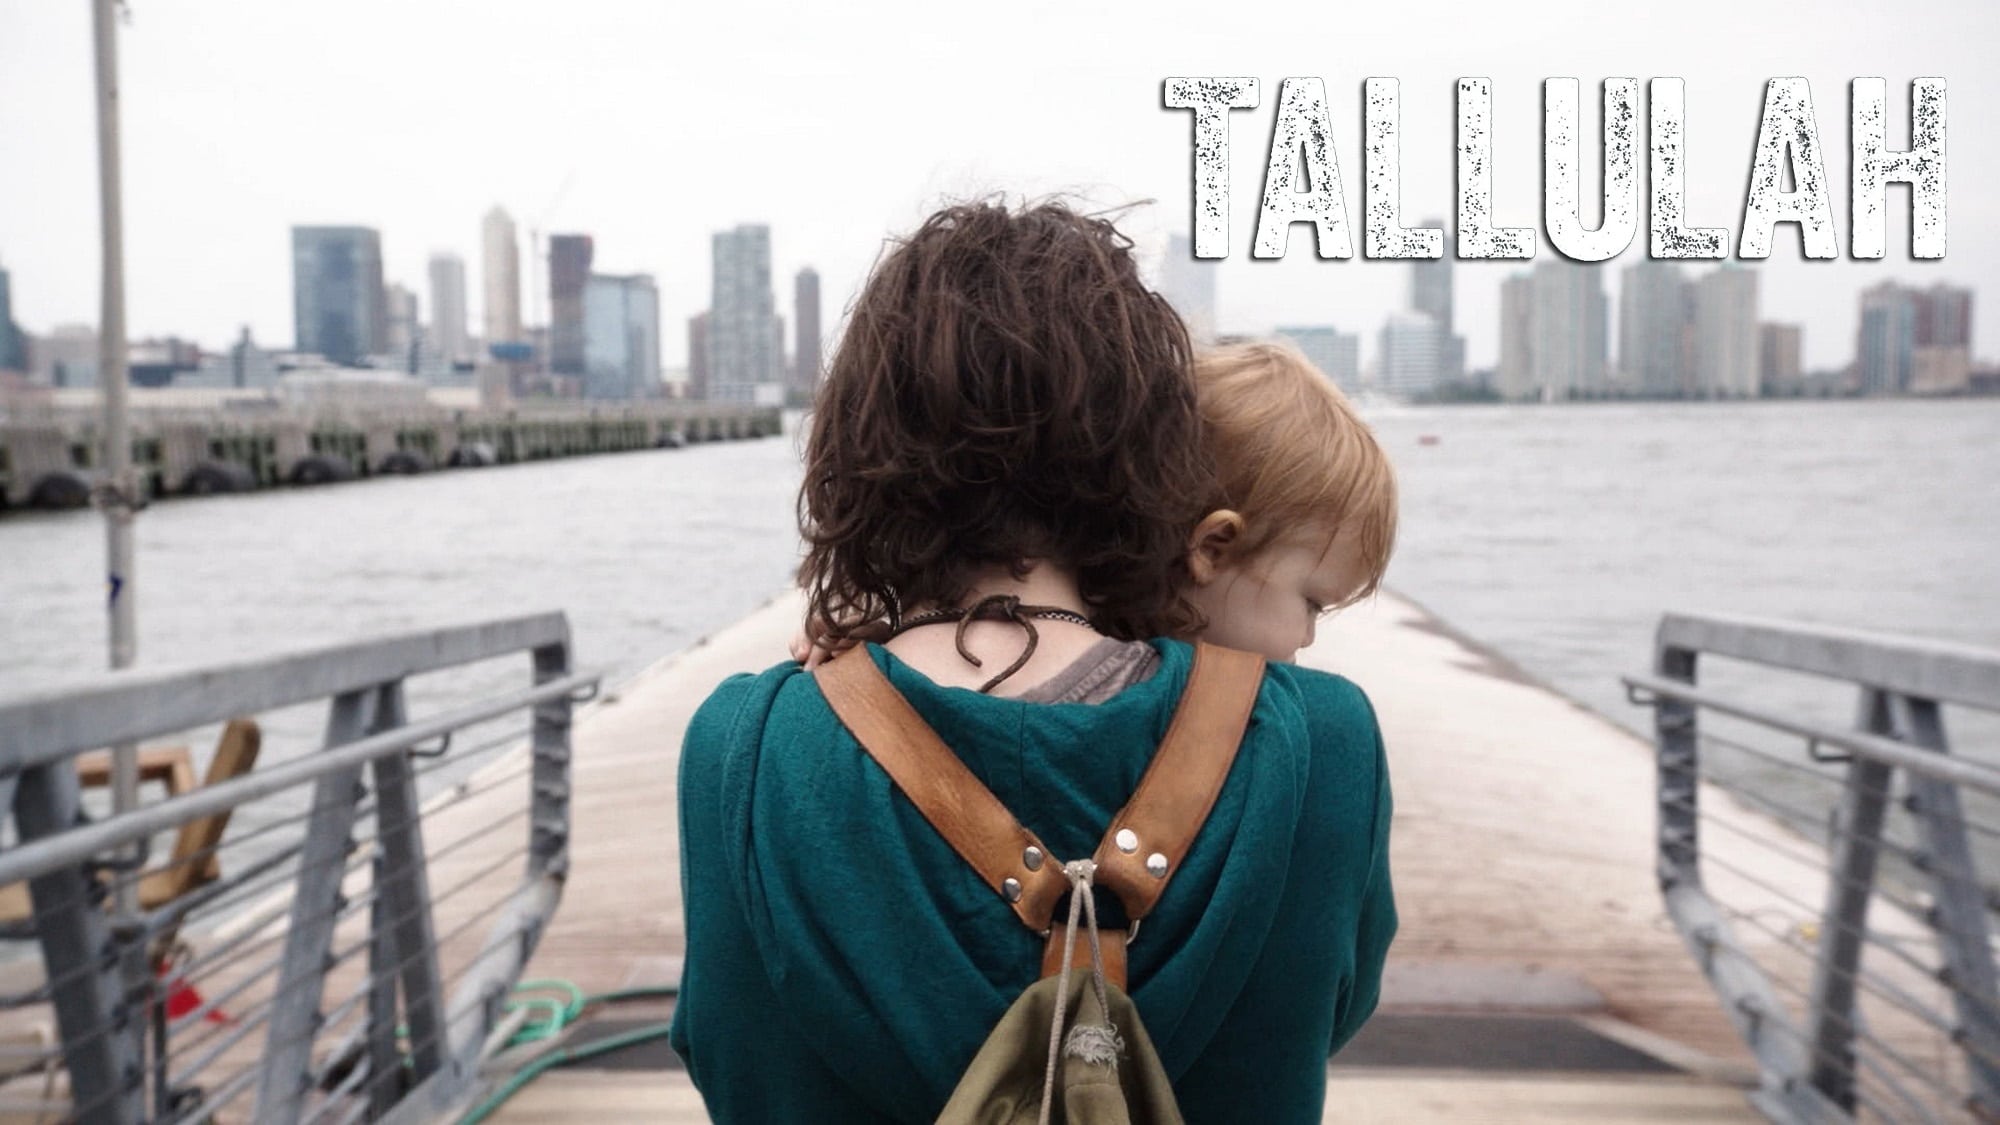 Tallulah (2016)